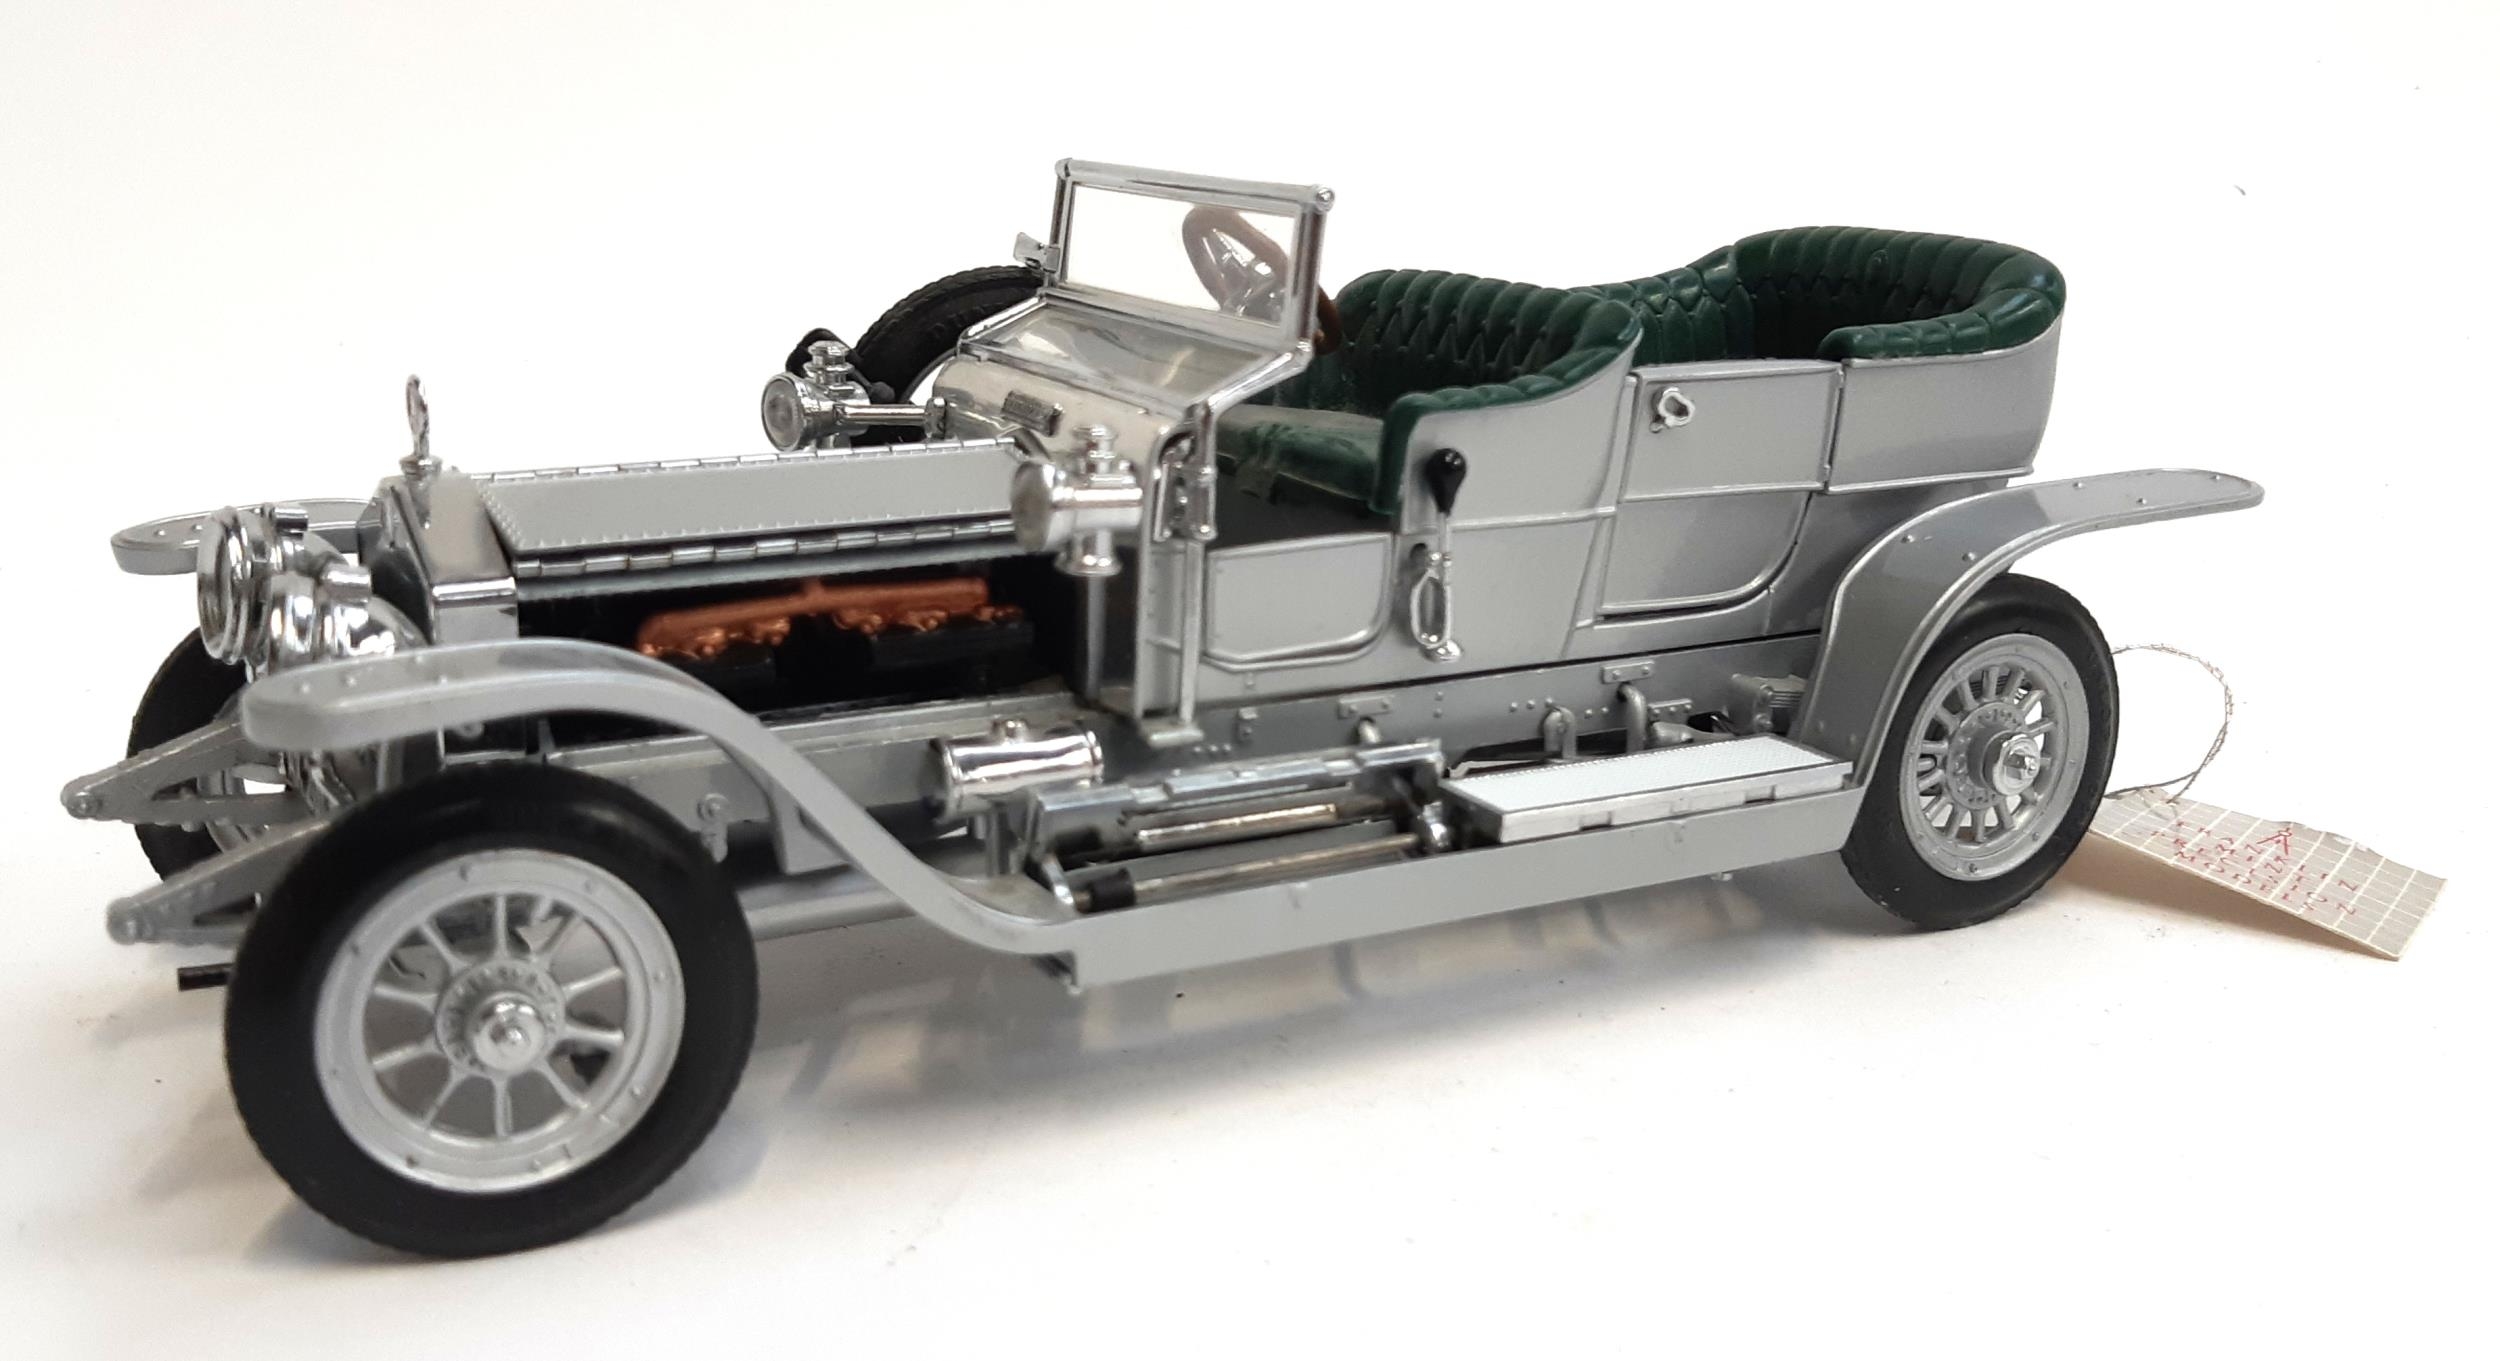 A Franklin Mint Precision model of a 1907 Rolls Royce Silver Ghost